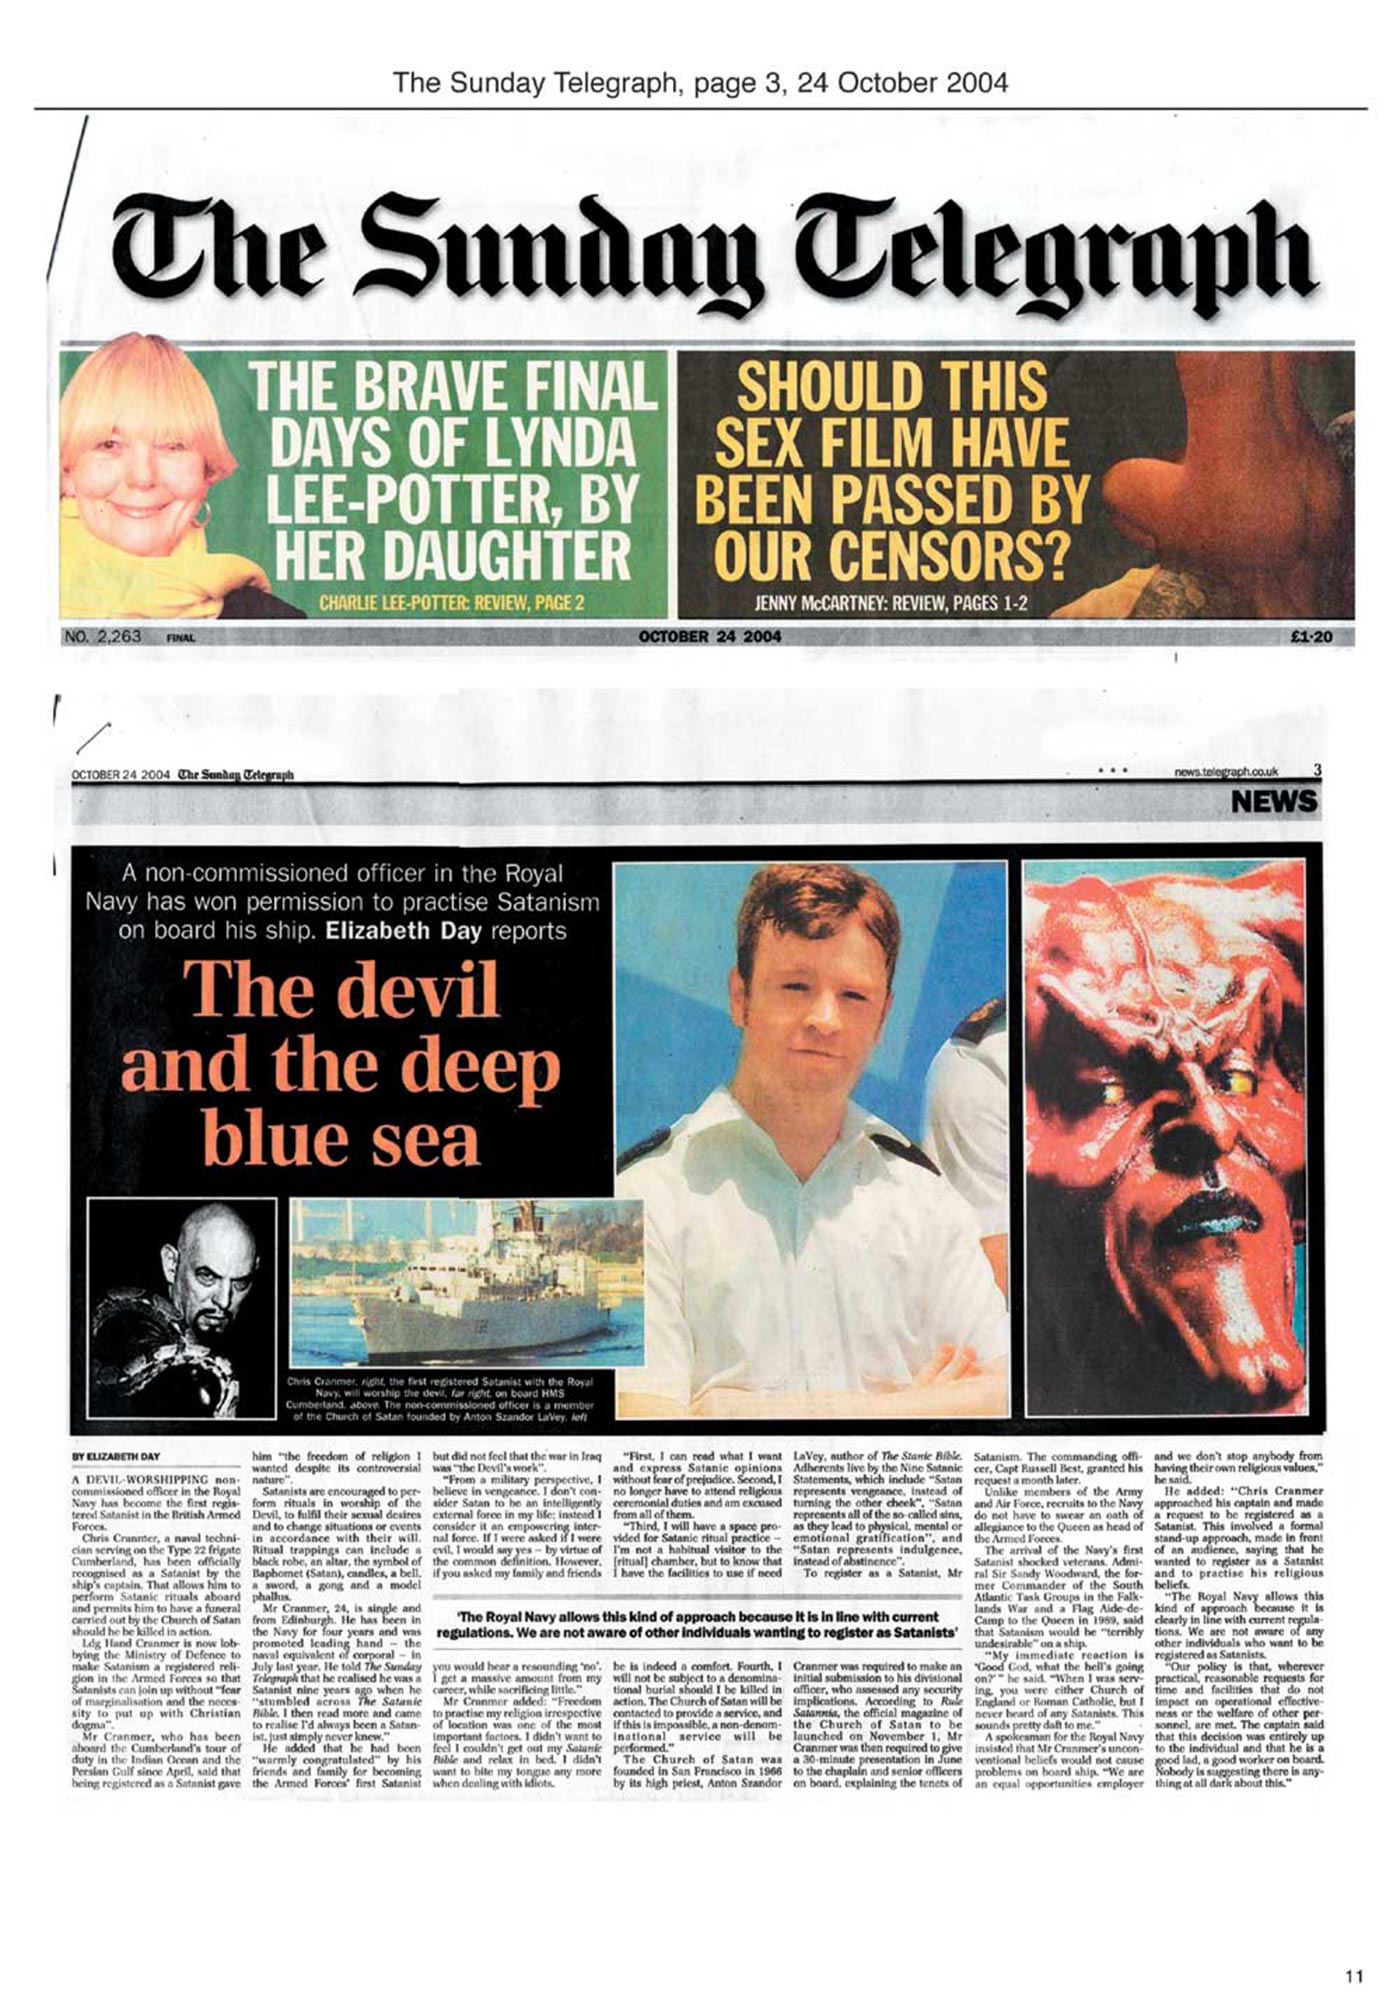 The Sunday Telegraph October 2004